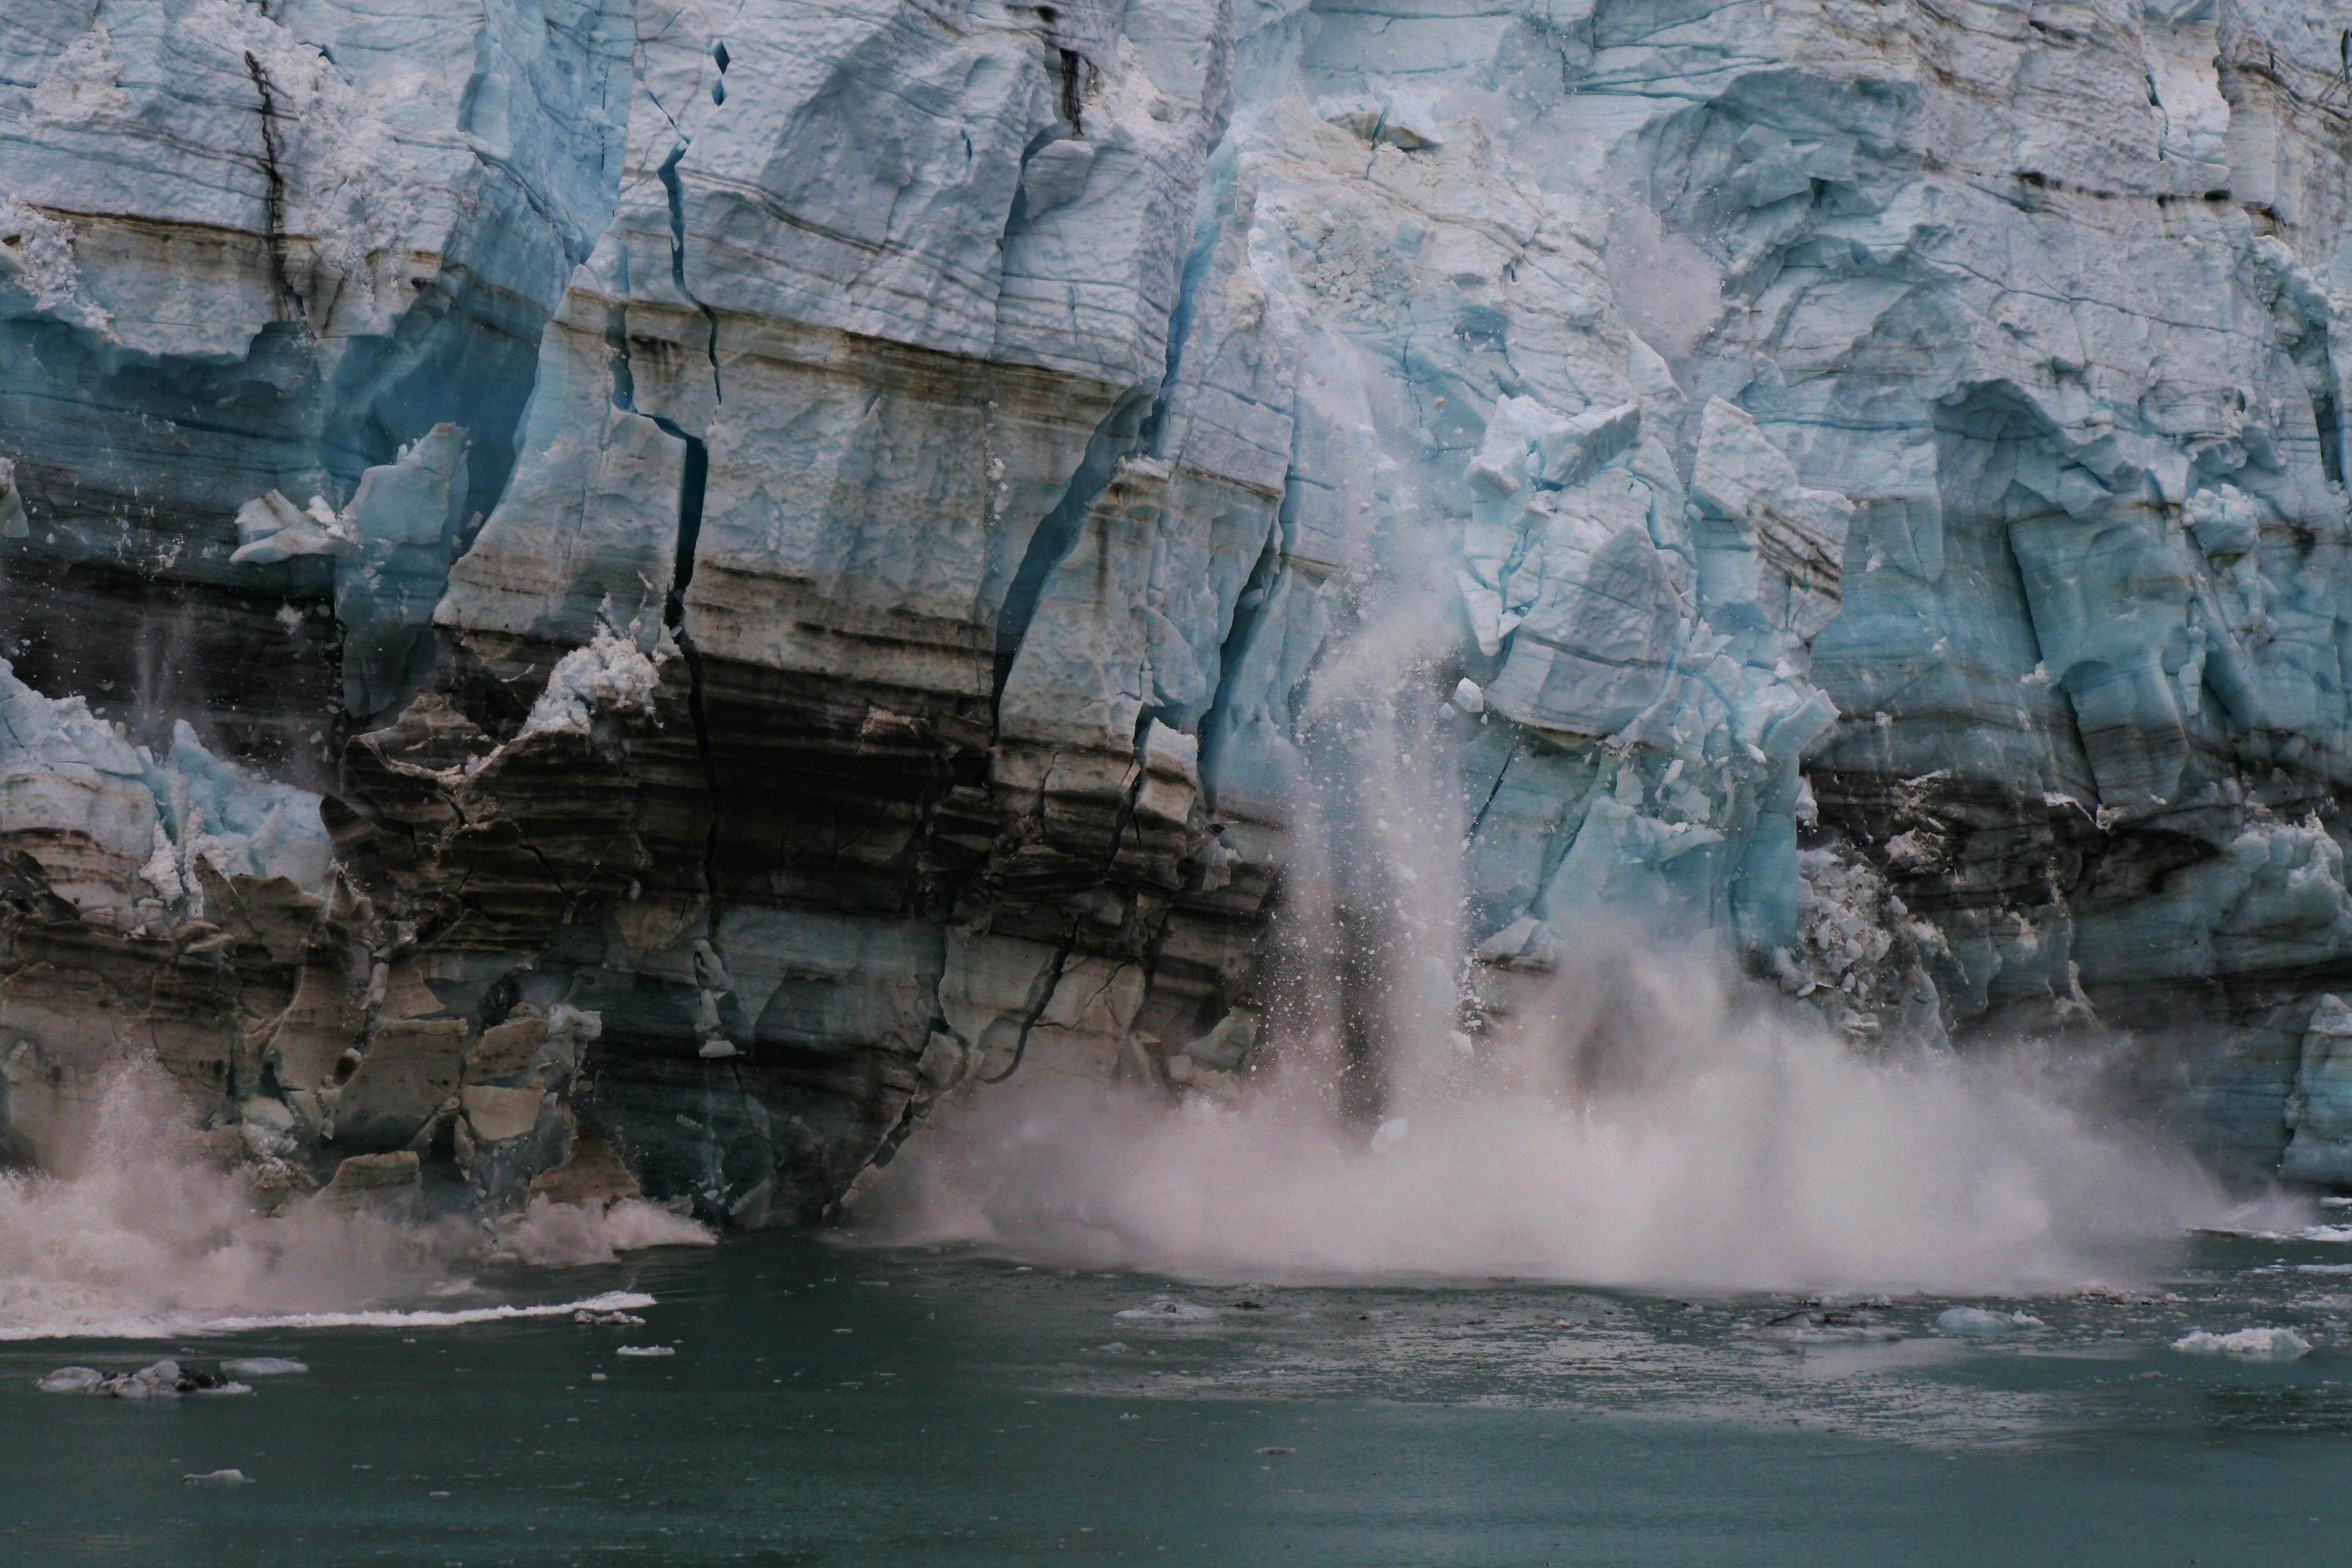 A calving glacier (a glacier melting and breaking)